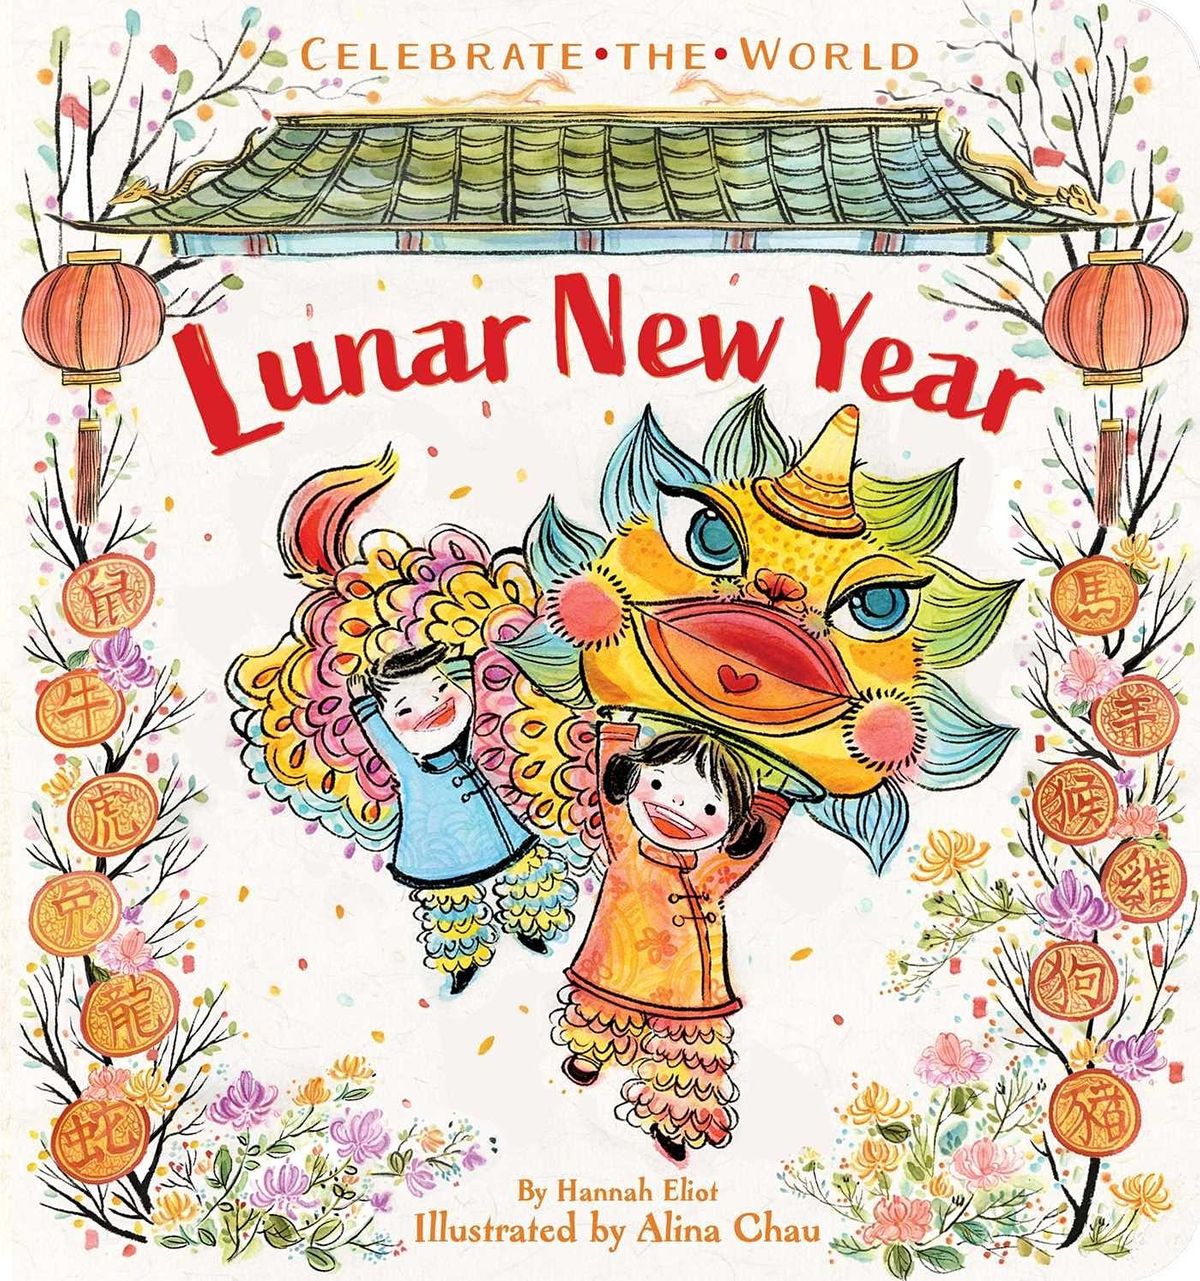 Celebrate Lunar New Year at  SHA!